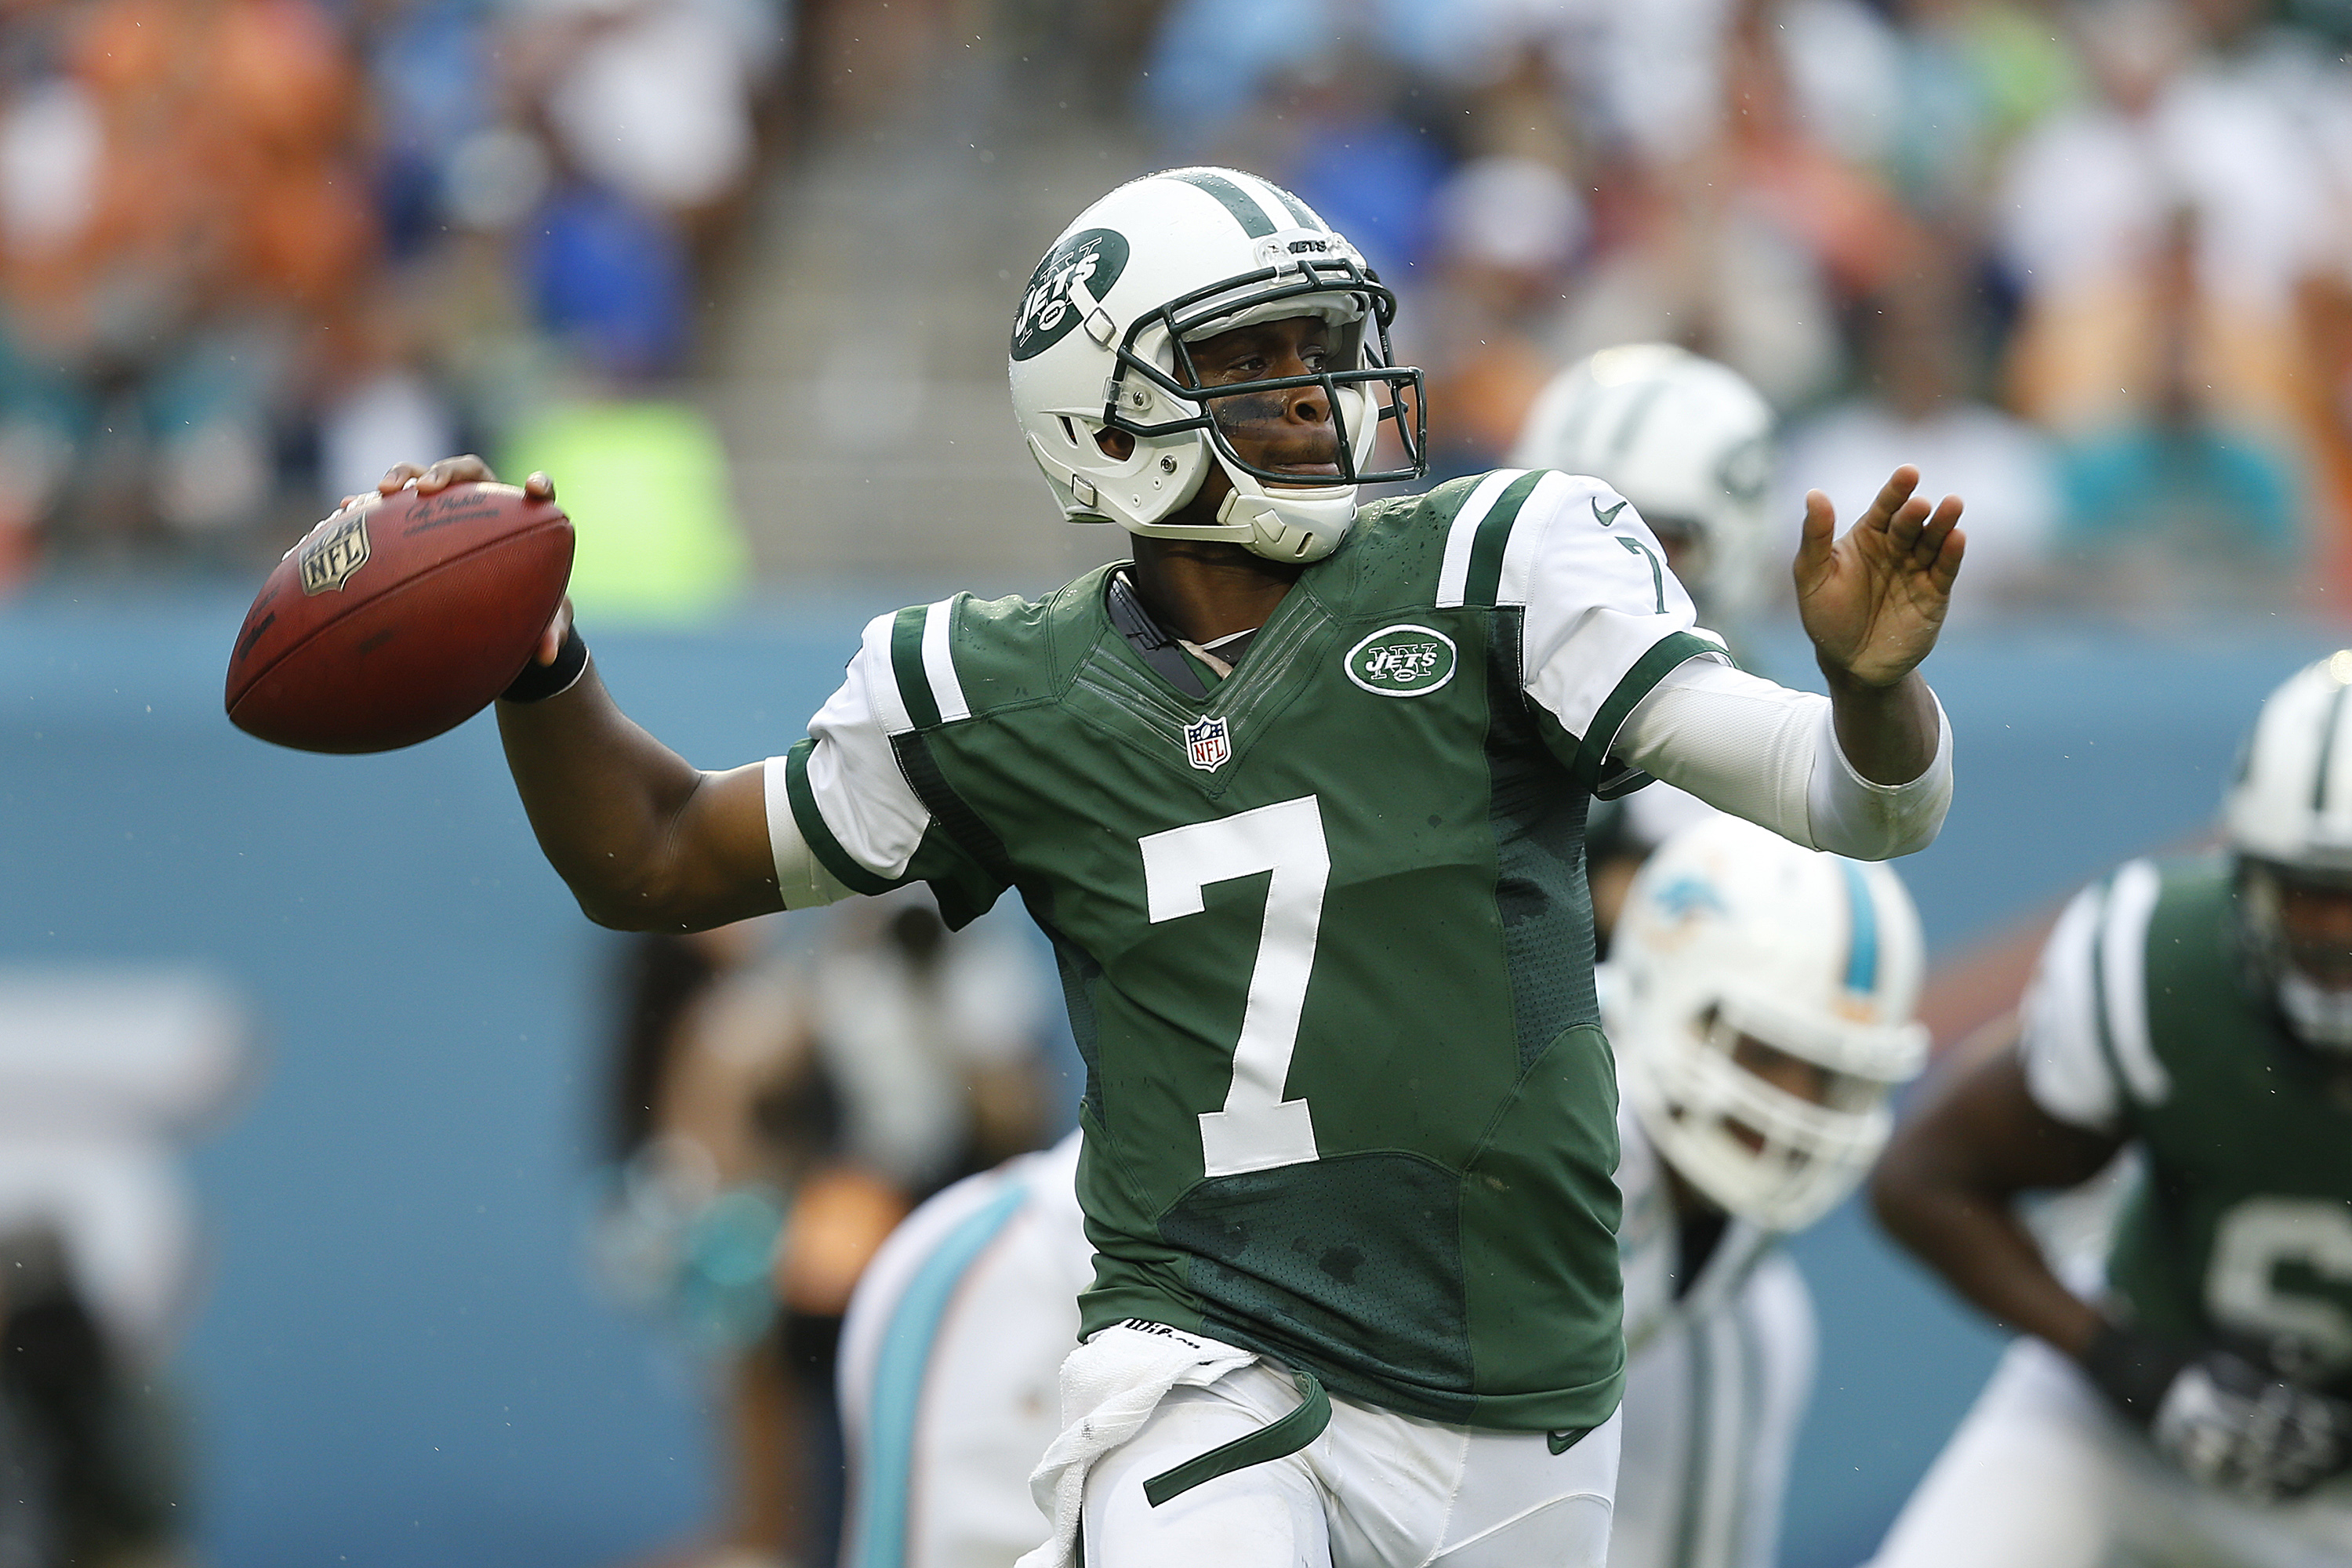 Jets quarterback Geno Smith (Photo by Joel Auerbach/Getty Images) 